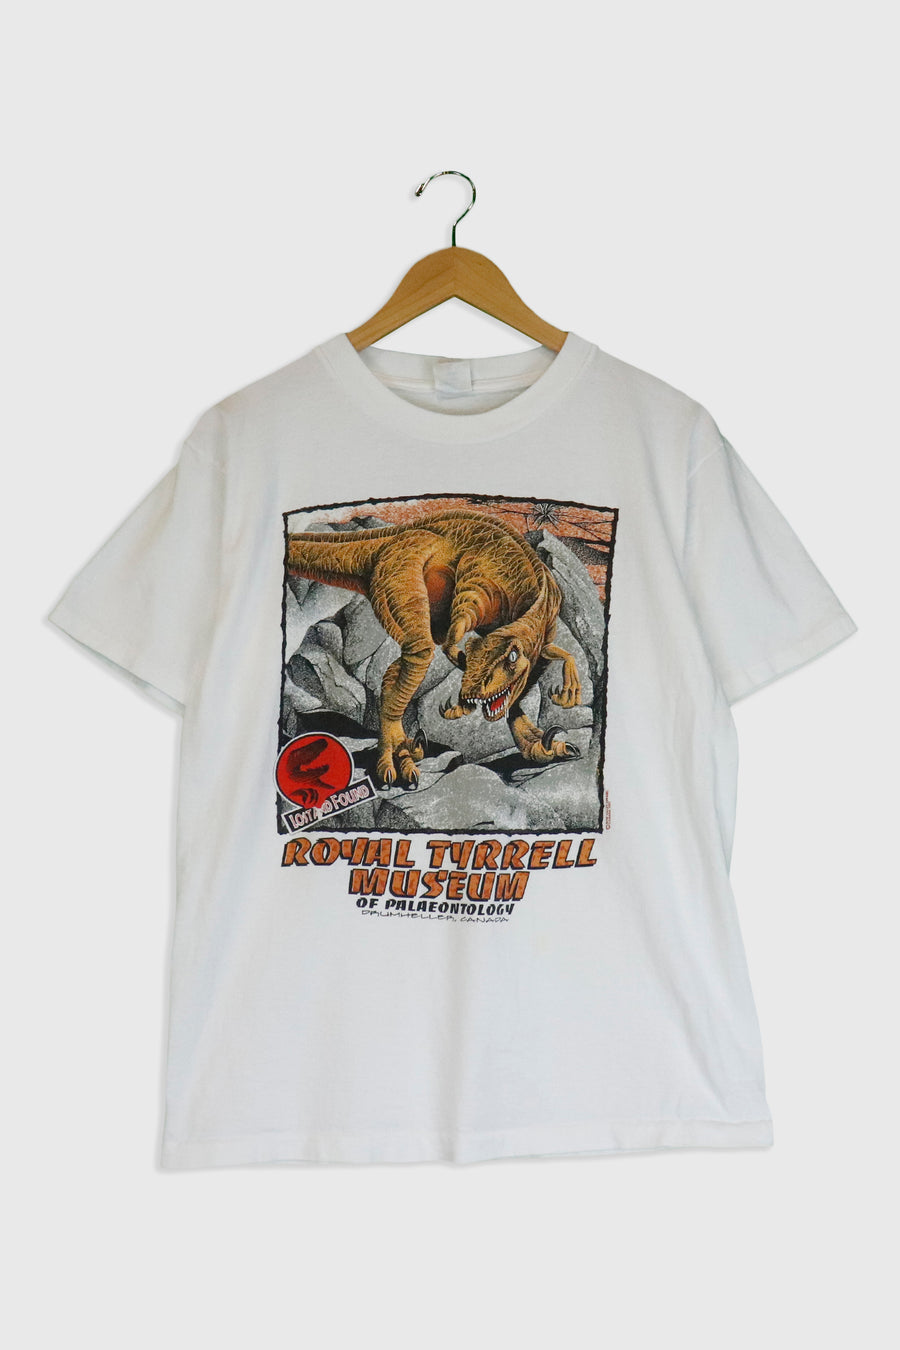 Vintage Royal Tyrrell Museum Of Phalaeontology T Shirt Sz M